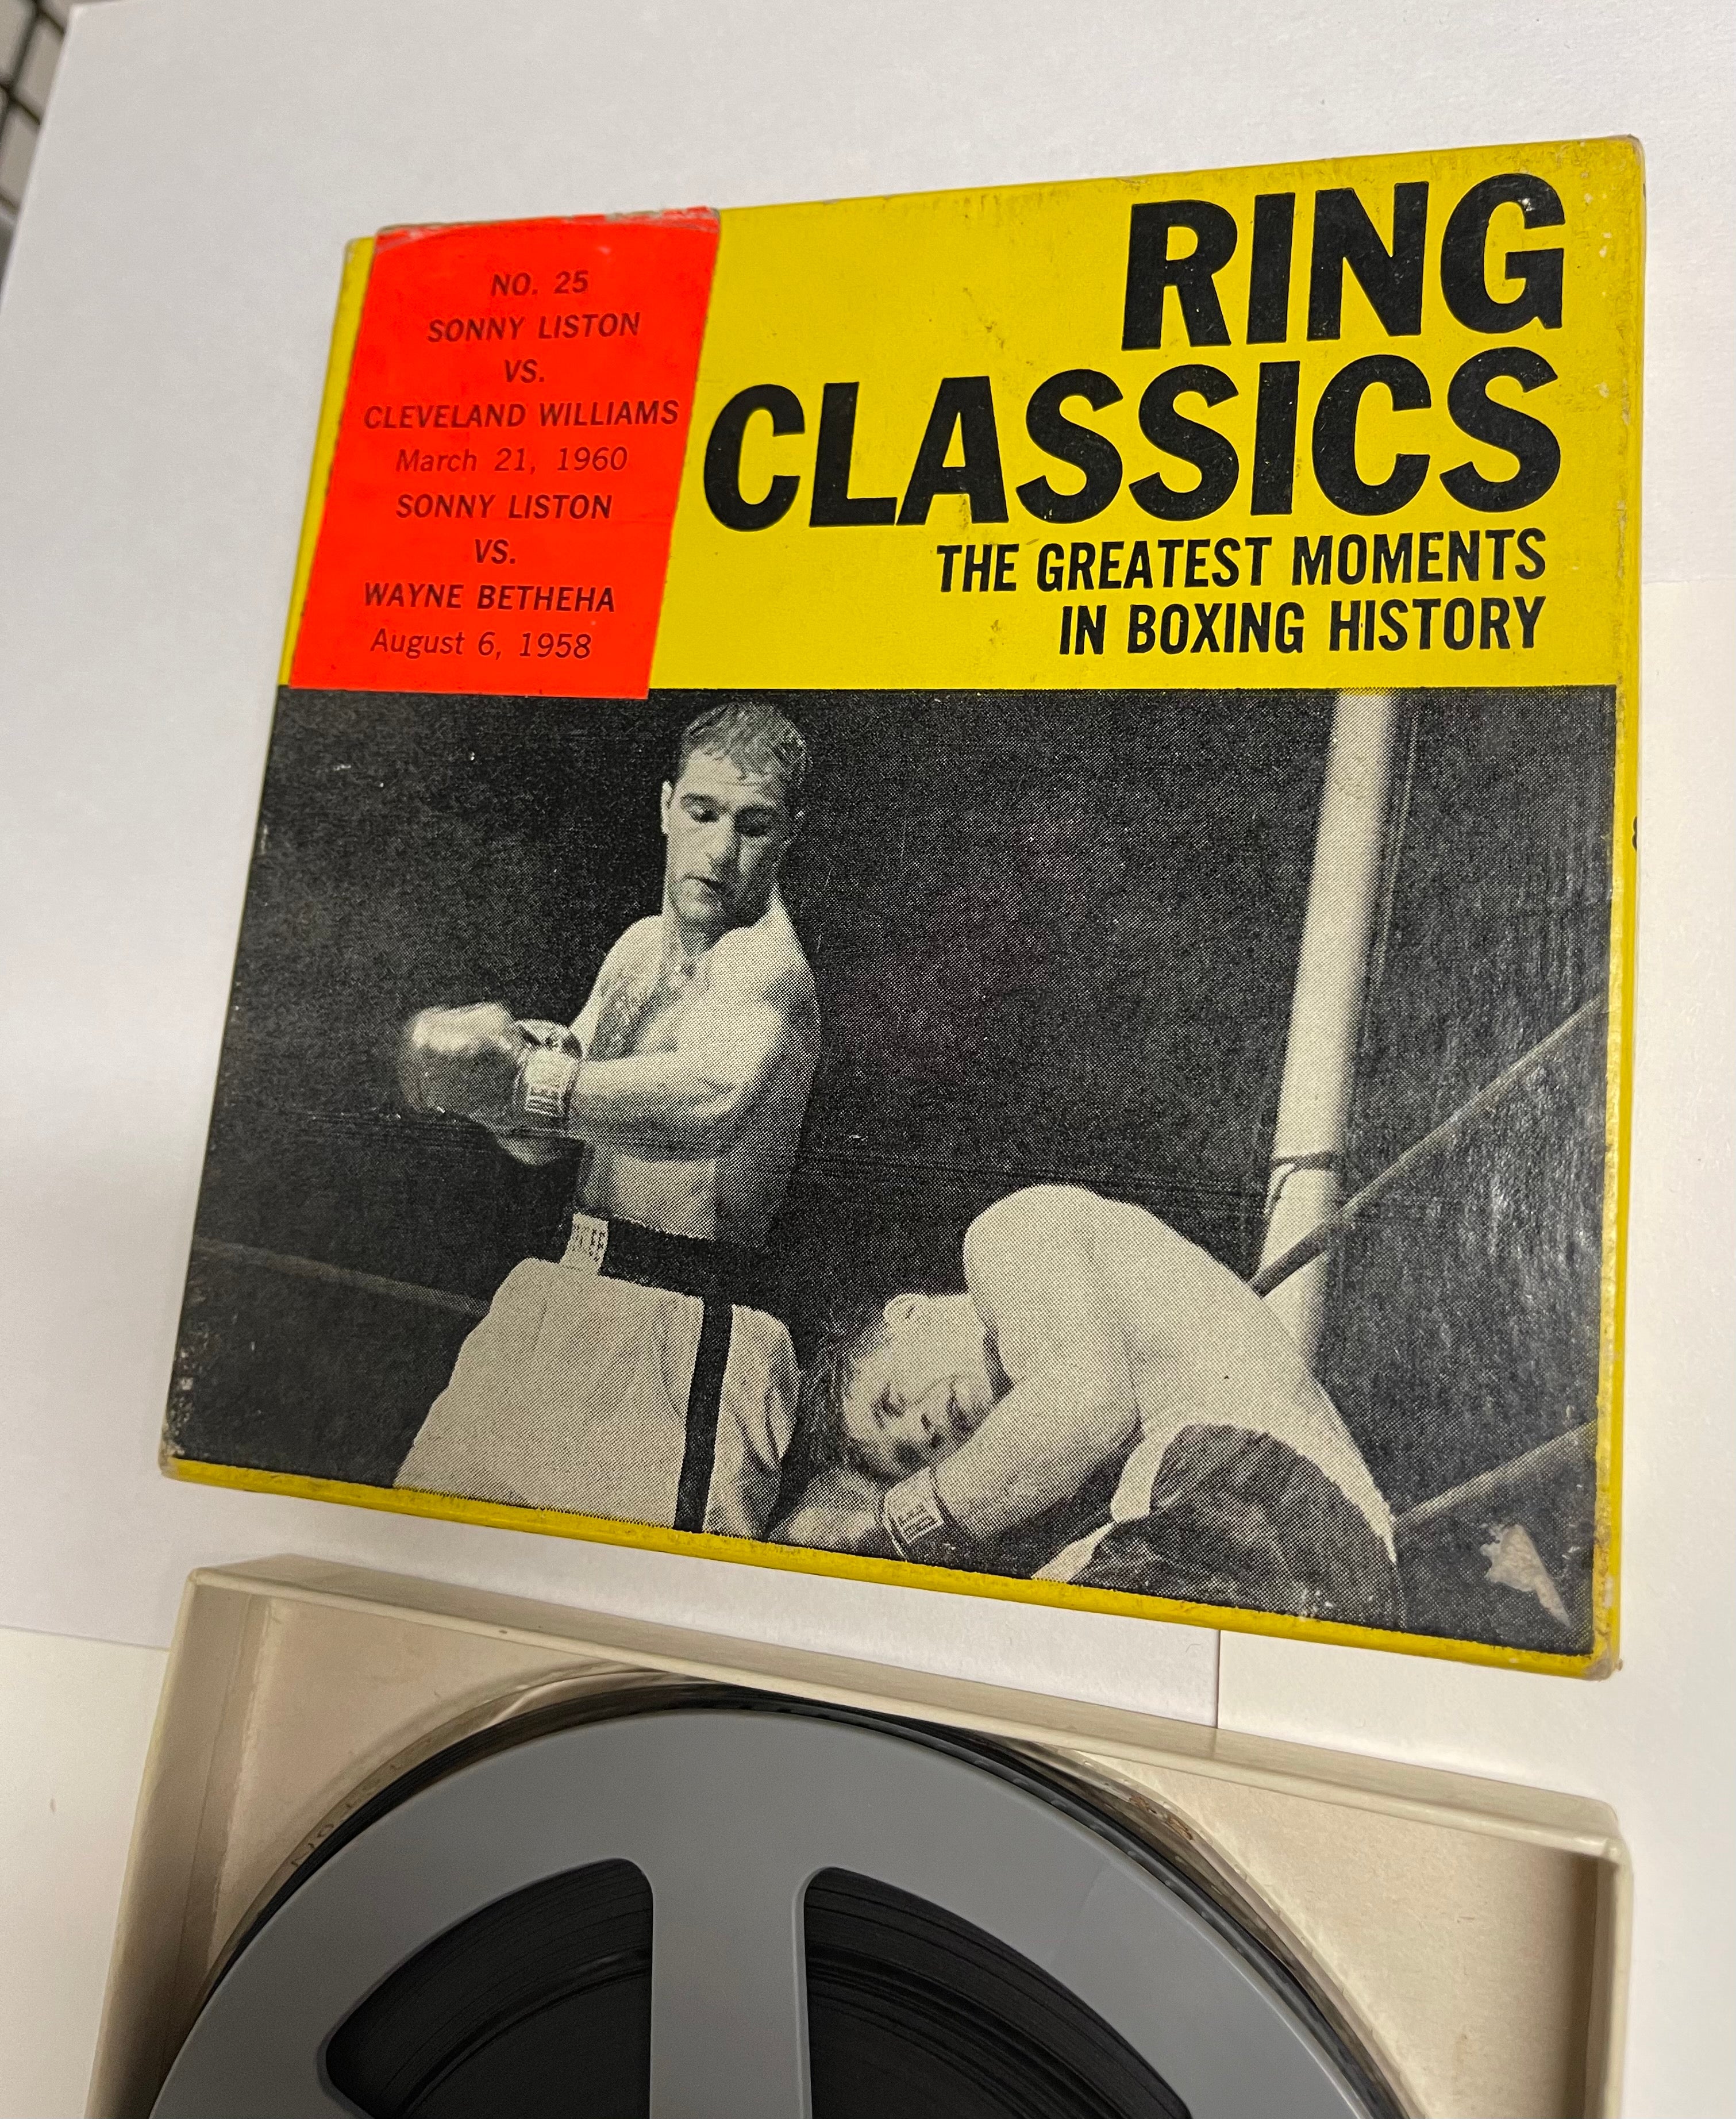 Sonny Liston vs rare Boxing matches super 8 film reel 1970s